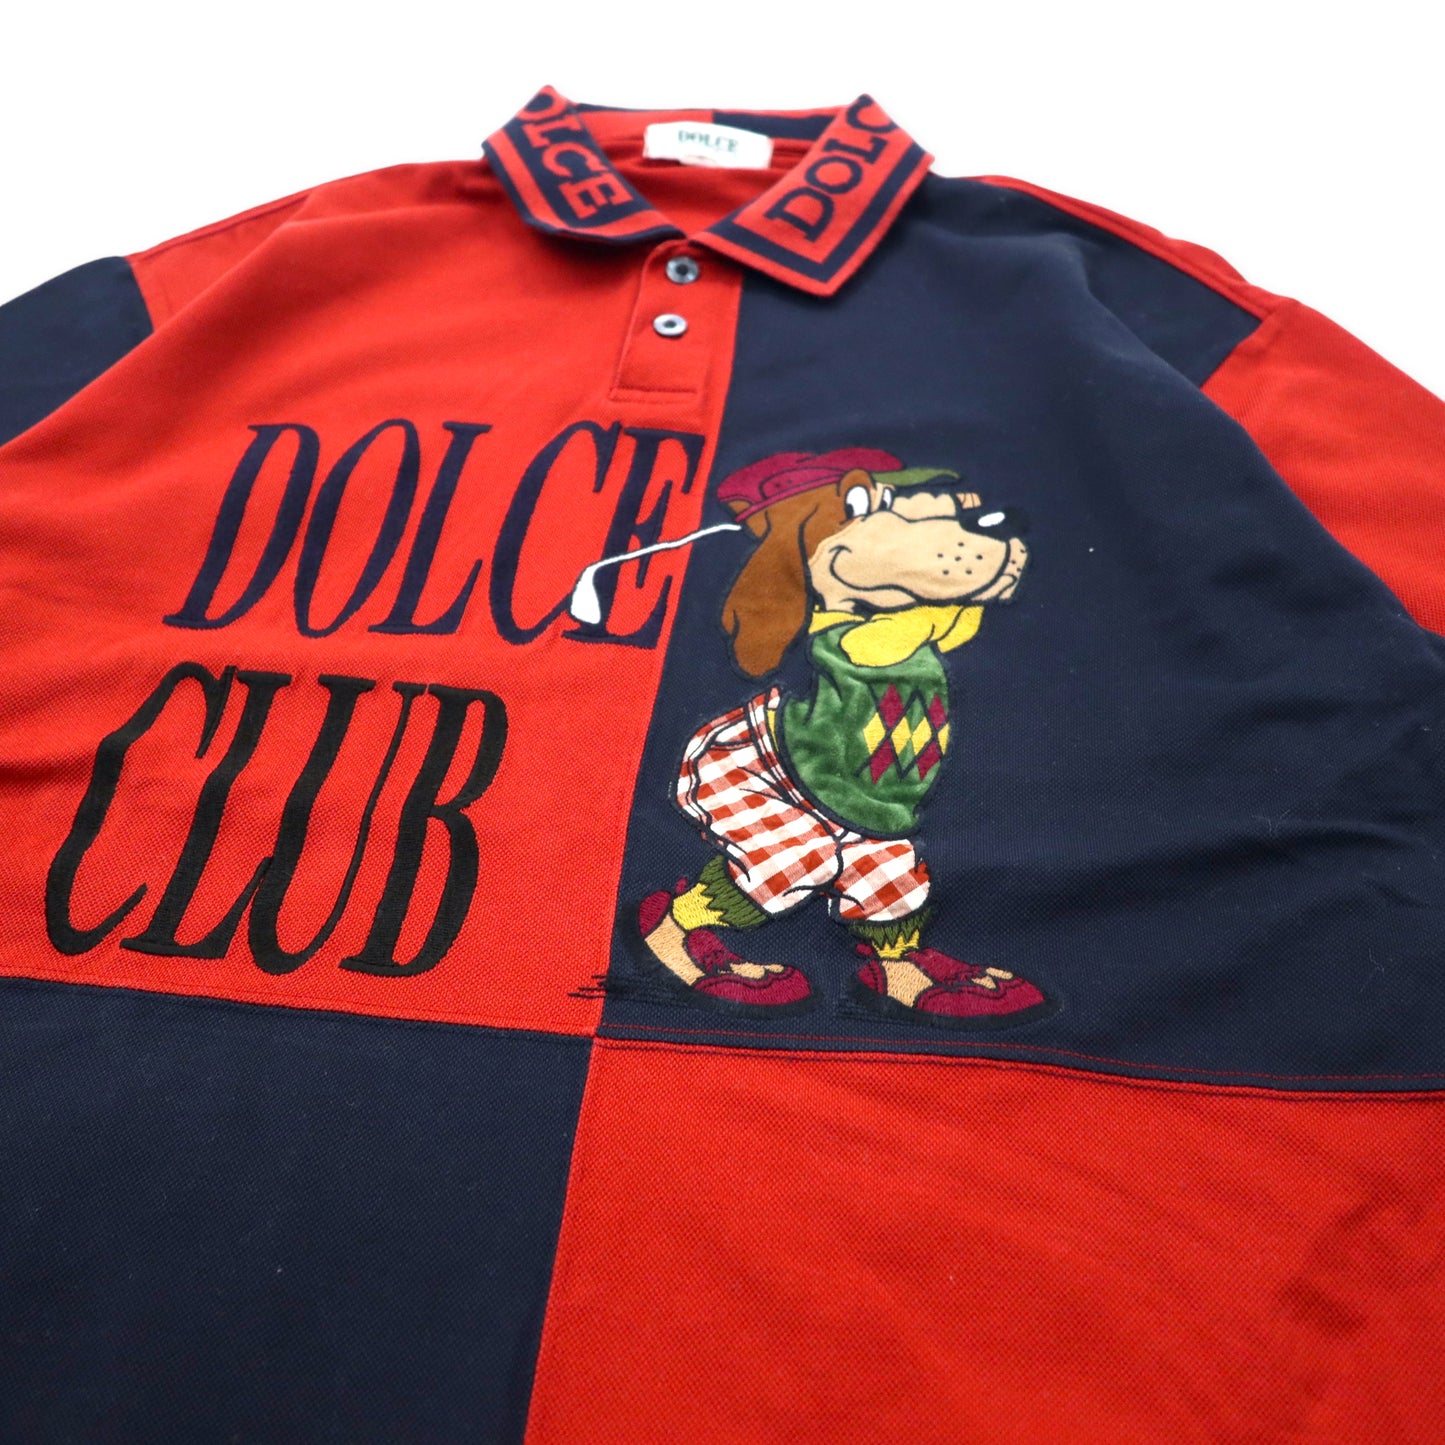 DOLCE CLUB 90年代 ポロシャツ 50 レッド ネイビー コットン 犬 キャラクター 日本製